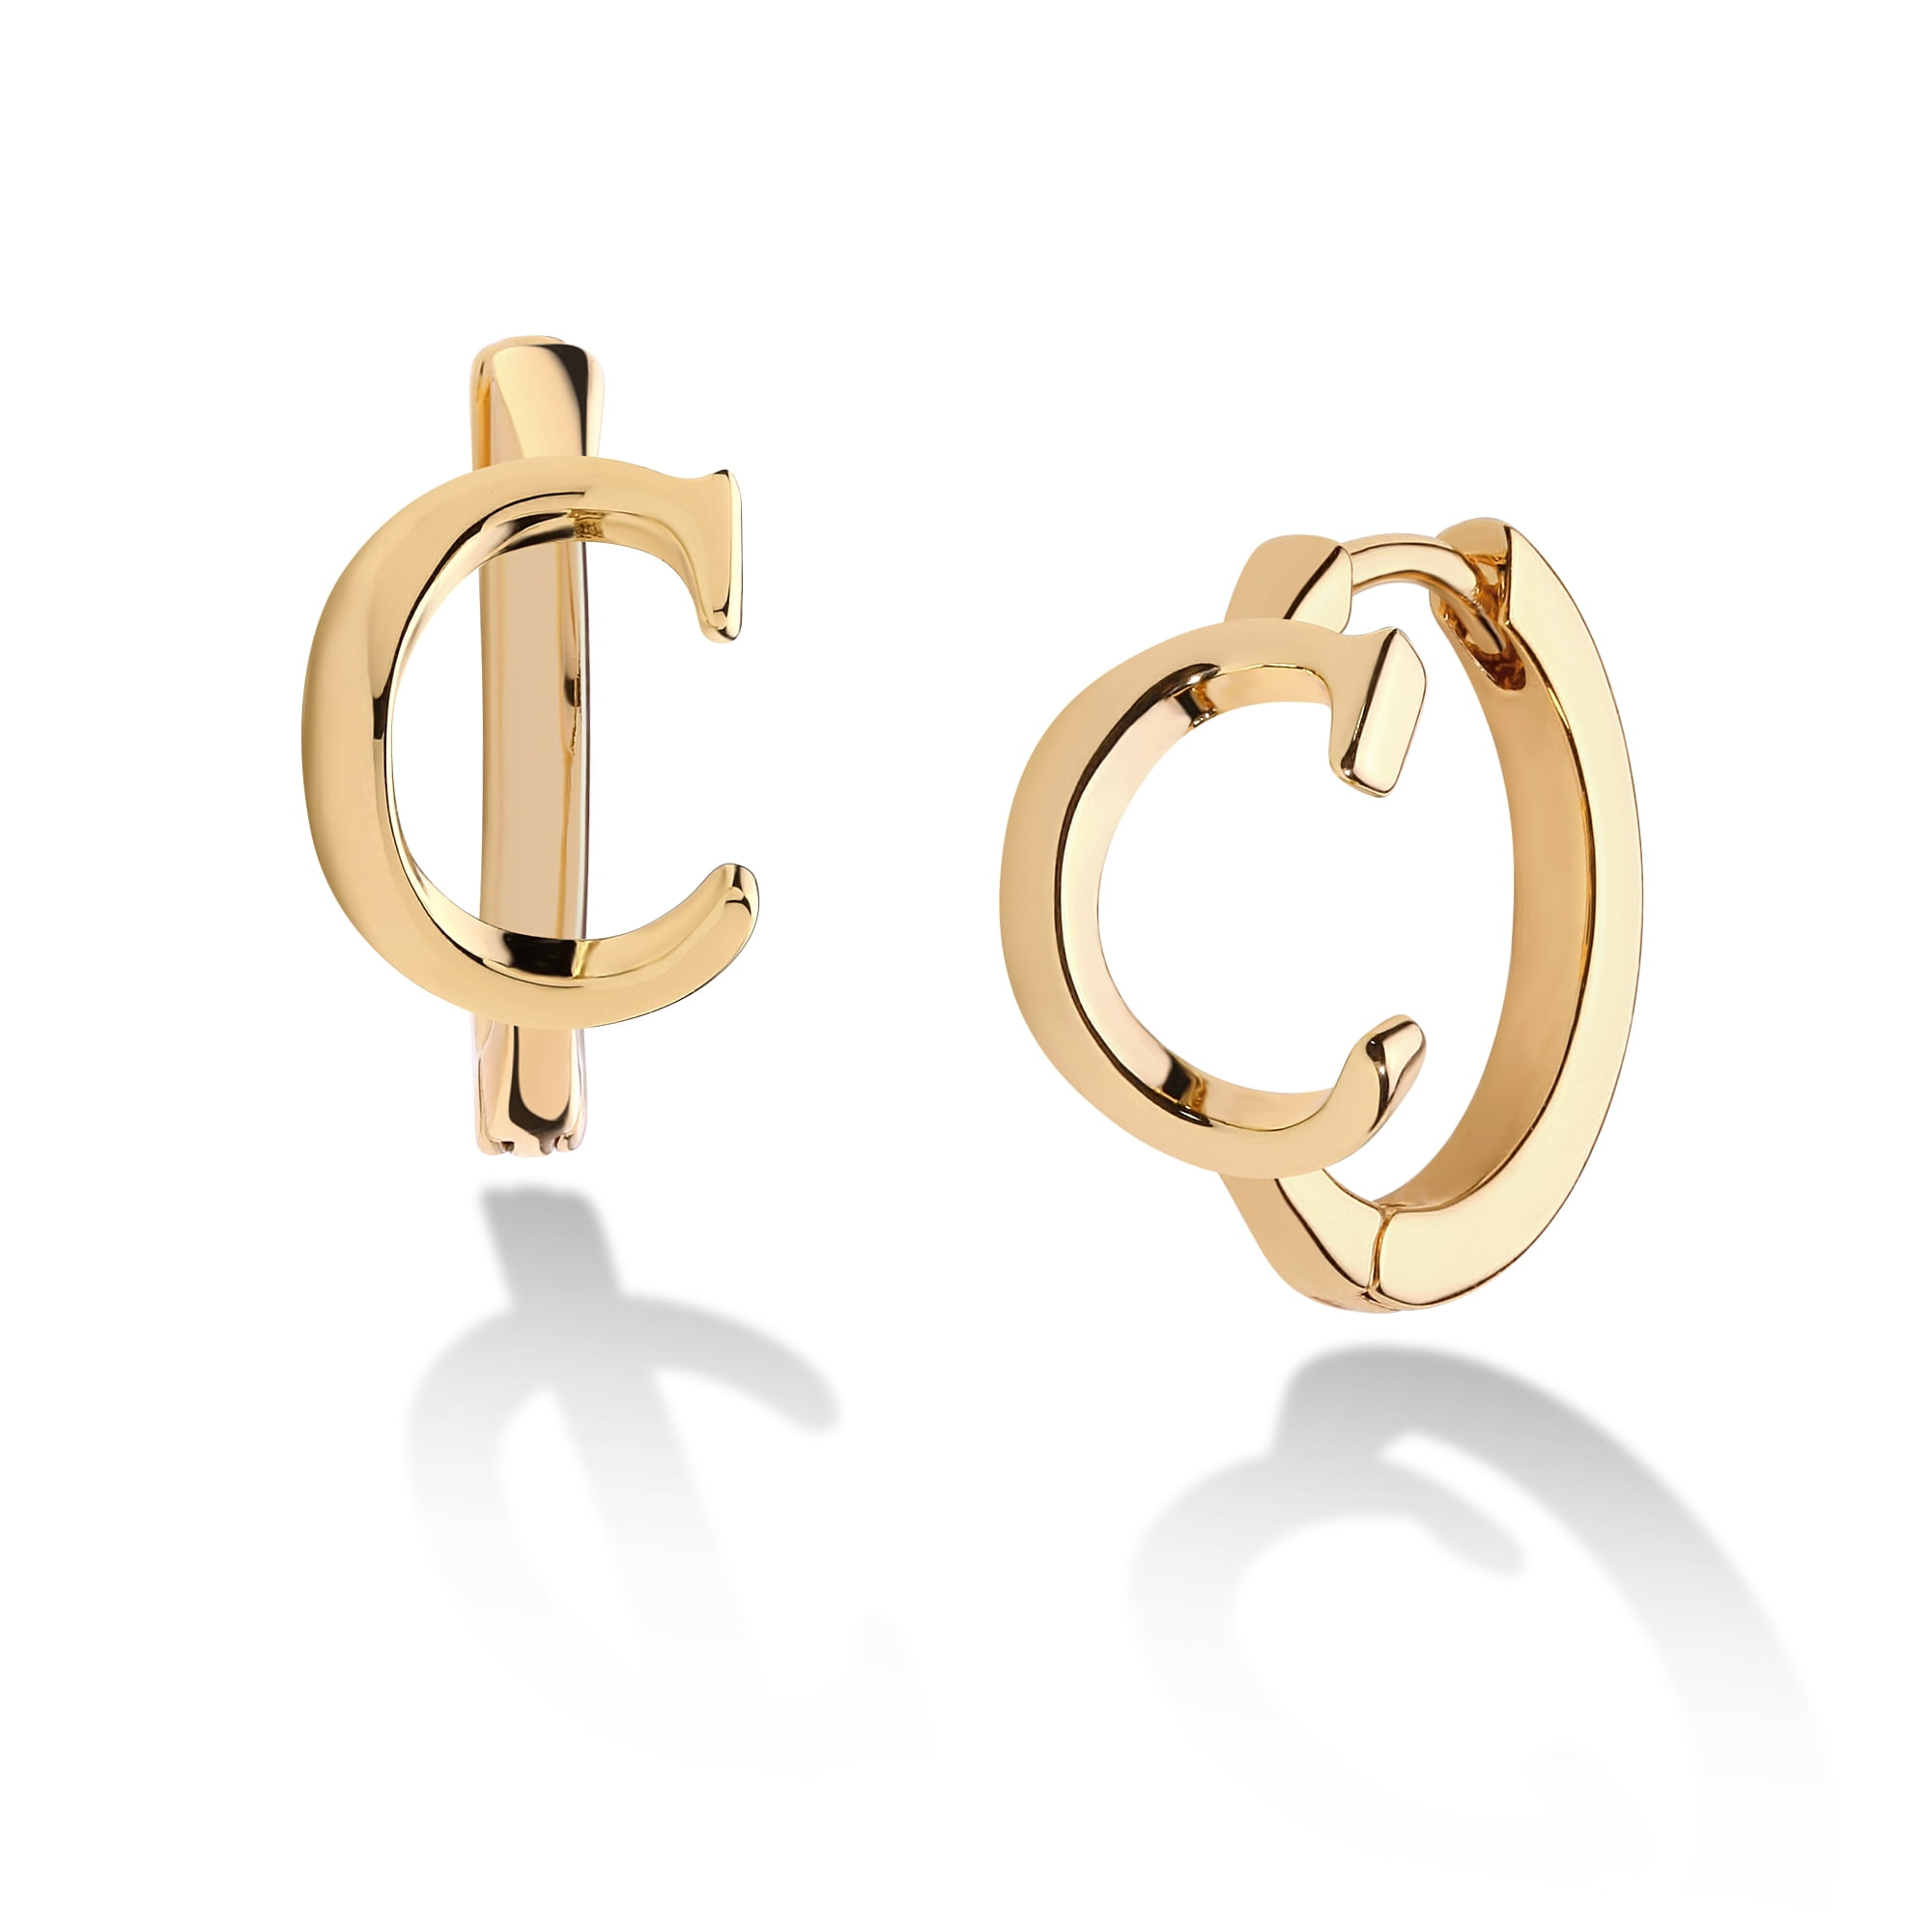 Wgoud Heart Initial Earrings for Women,14K Real Gold Plated Huggie Earrings，Heart Drops Alphabet Letters A To Z Hoop Earrings for Girl Jewelry Gifts 